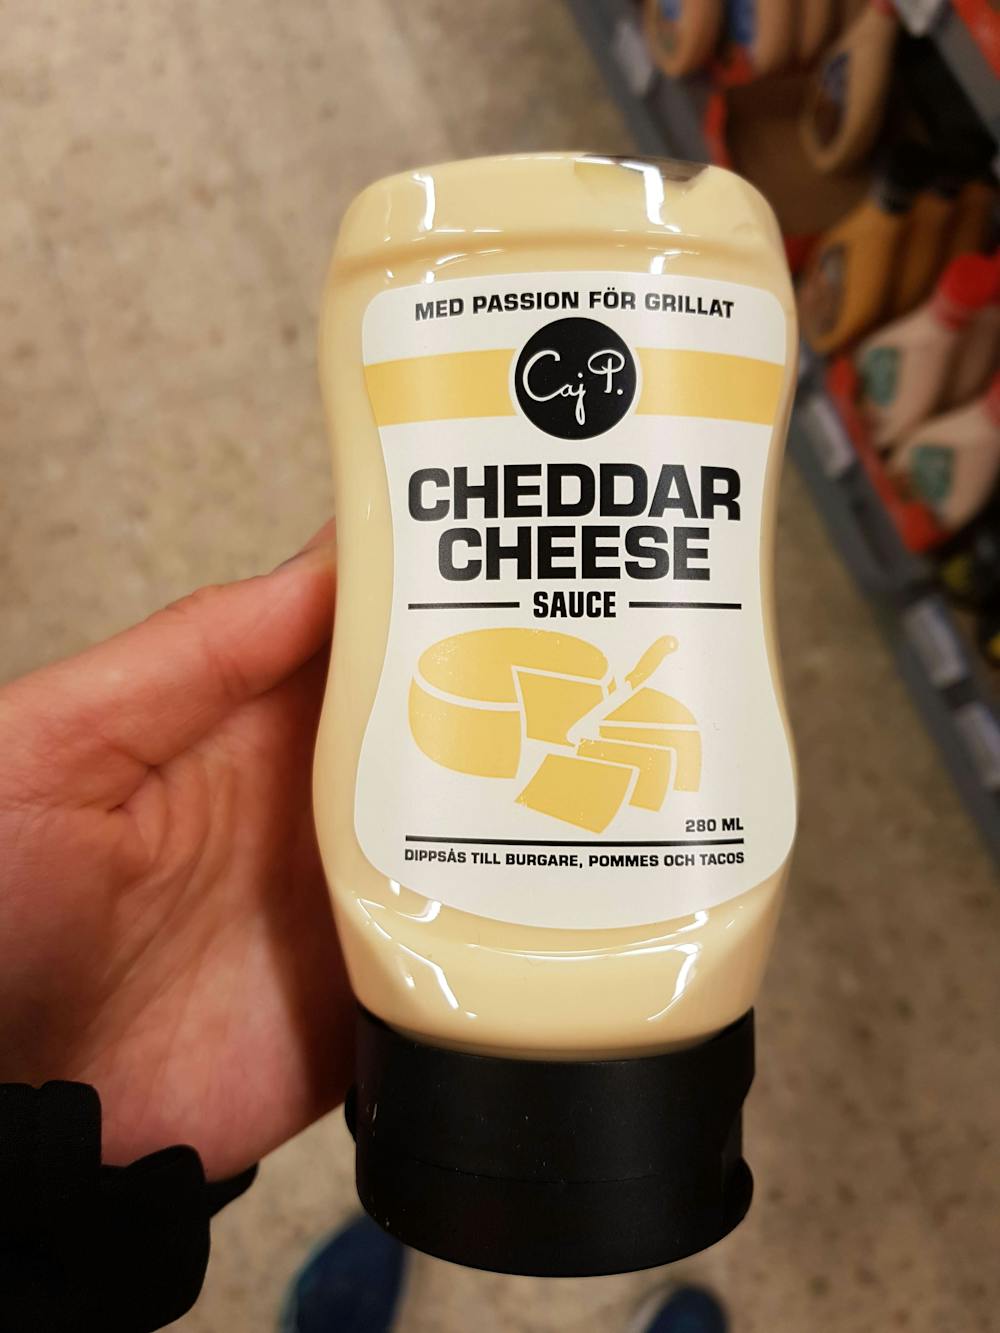 Cheddar cheese sauce, Caj. P.